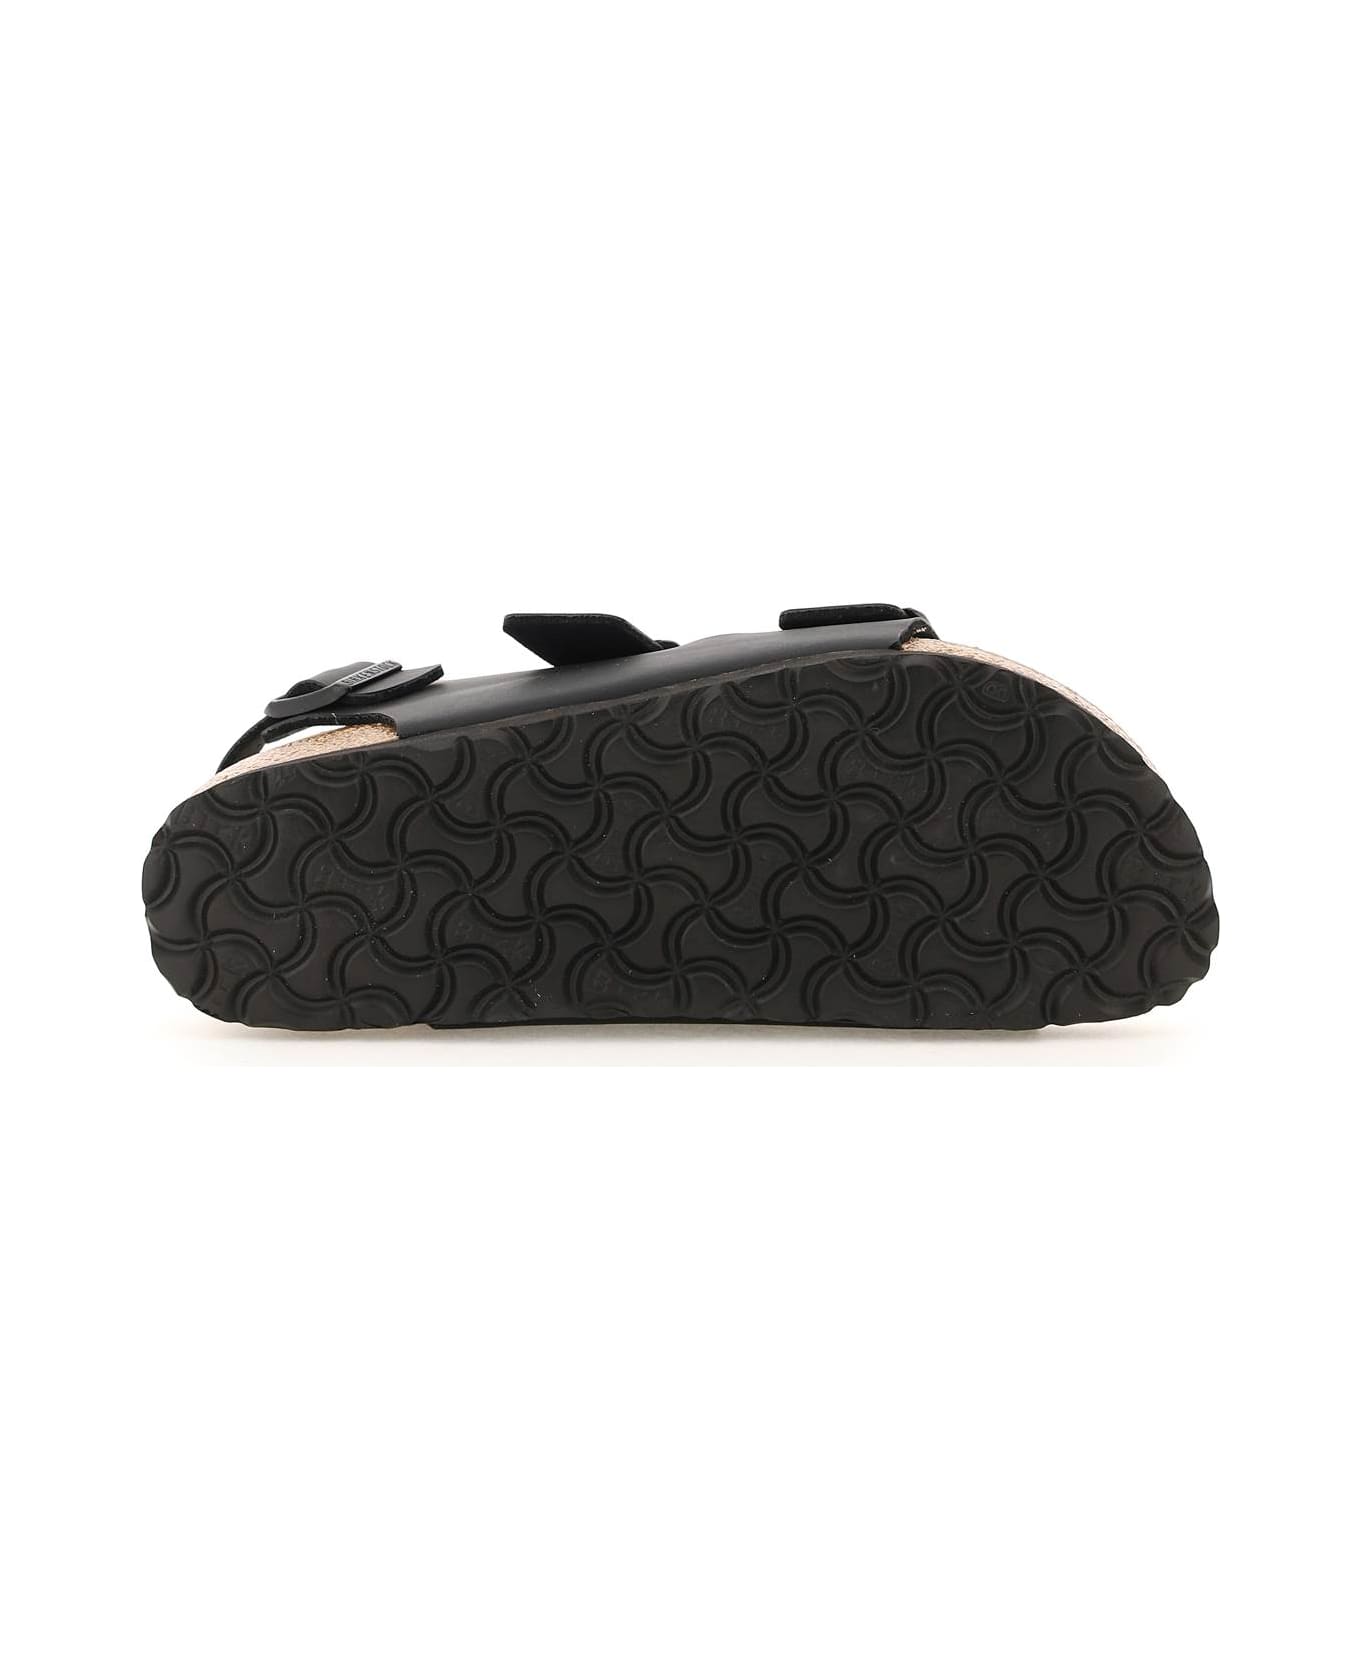 Birkenstock Milano Sandals Narrow Fit - BLACK (Black)